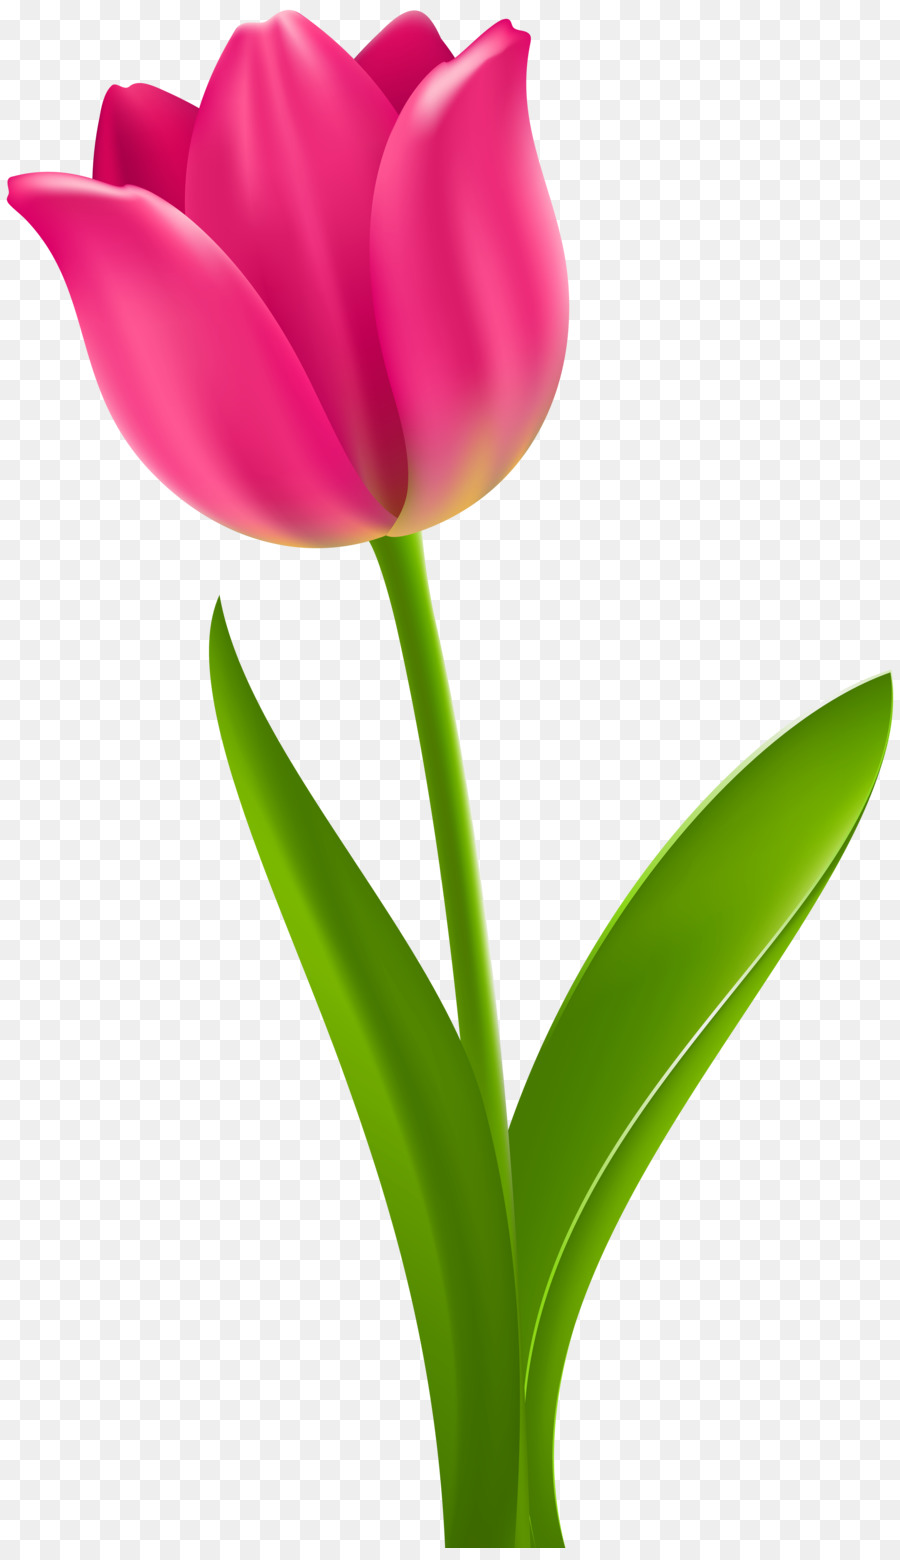 Tulip Flower Desktop Wallpaper Clip art - pink tulip png download - 4651*8000 - Free Transparent Tulip png Download.